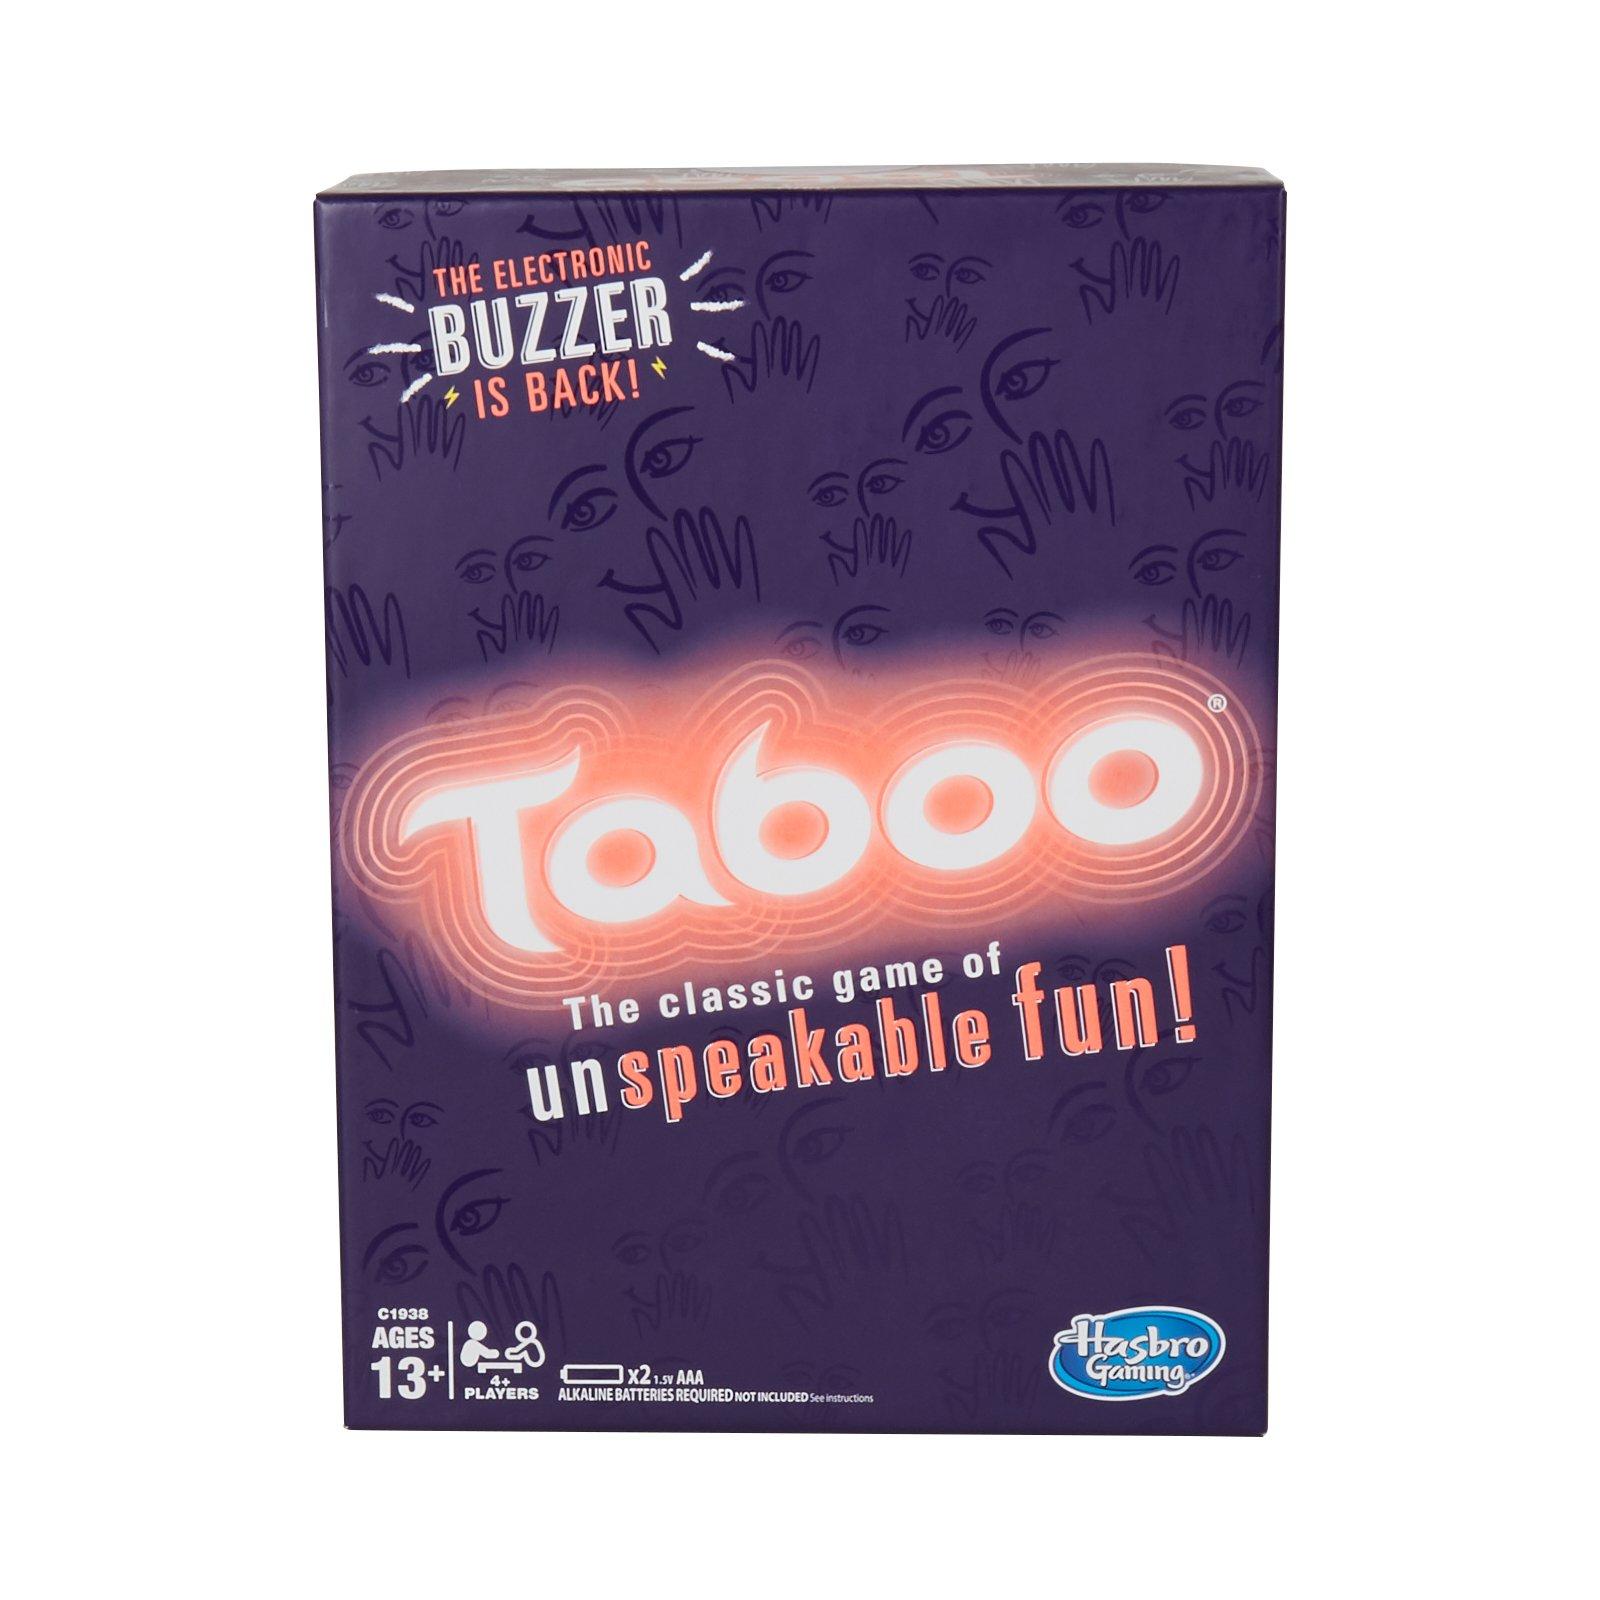 taboo board game cards